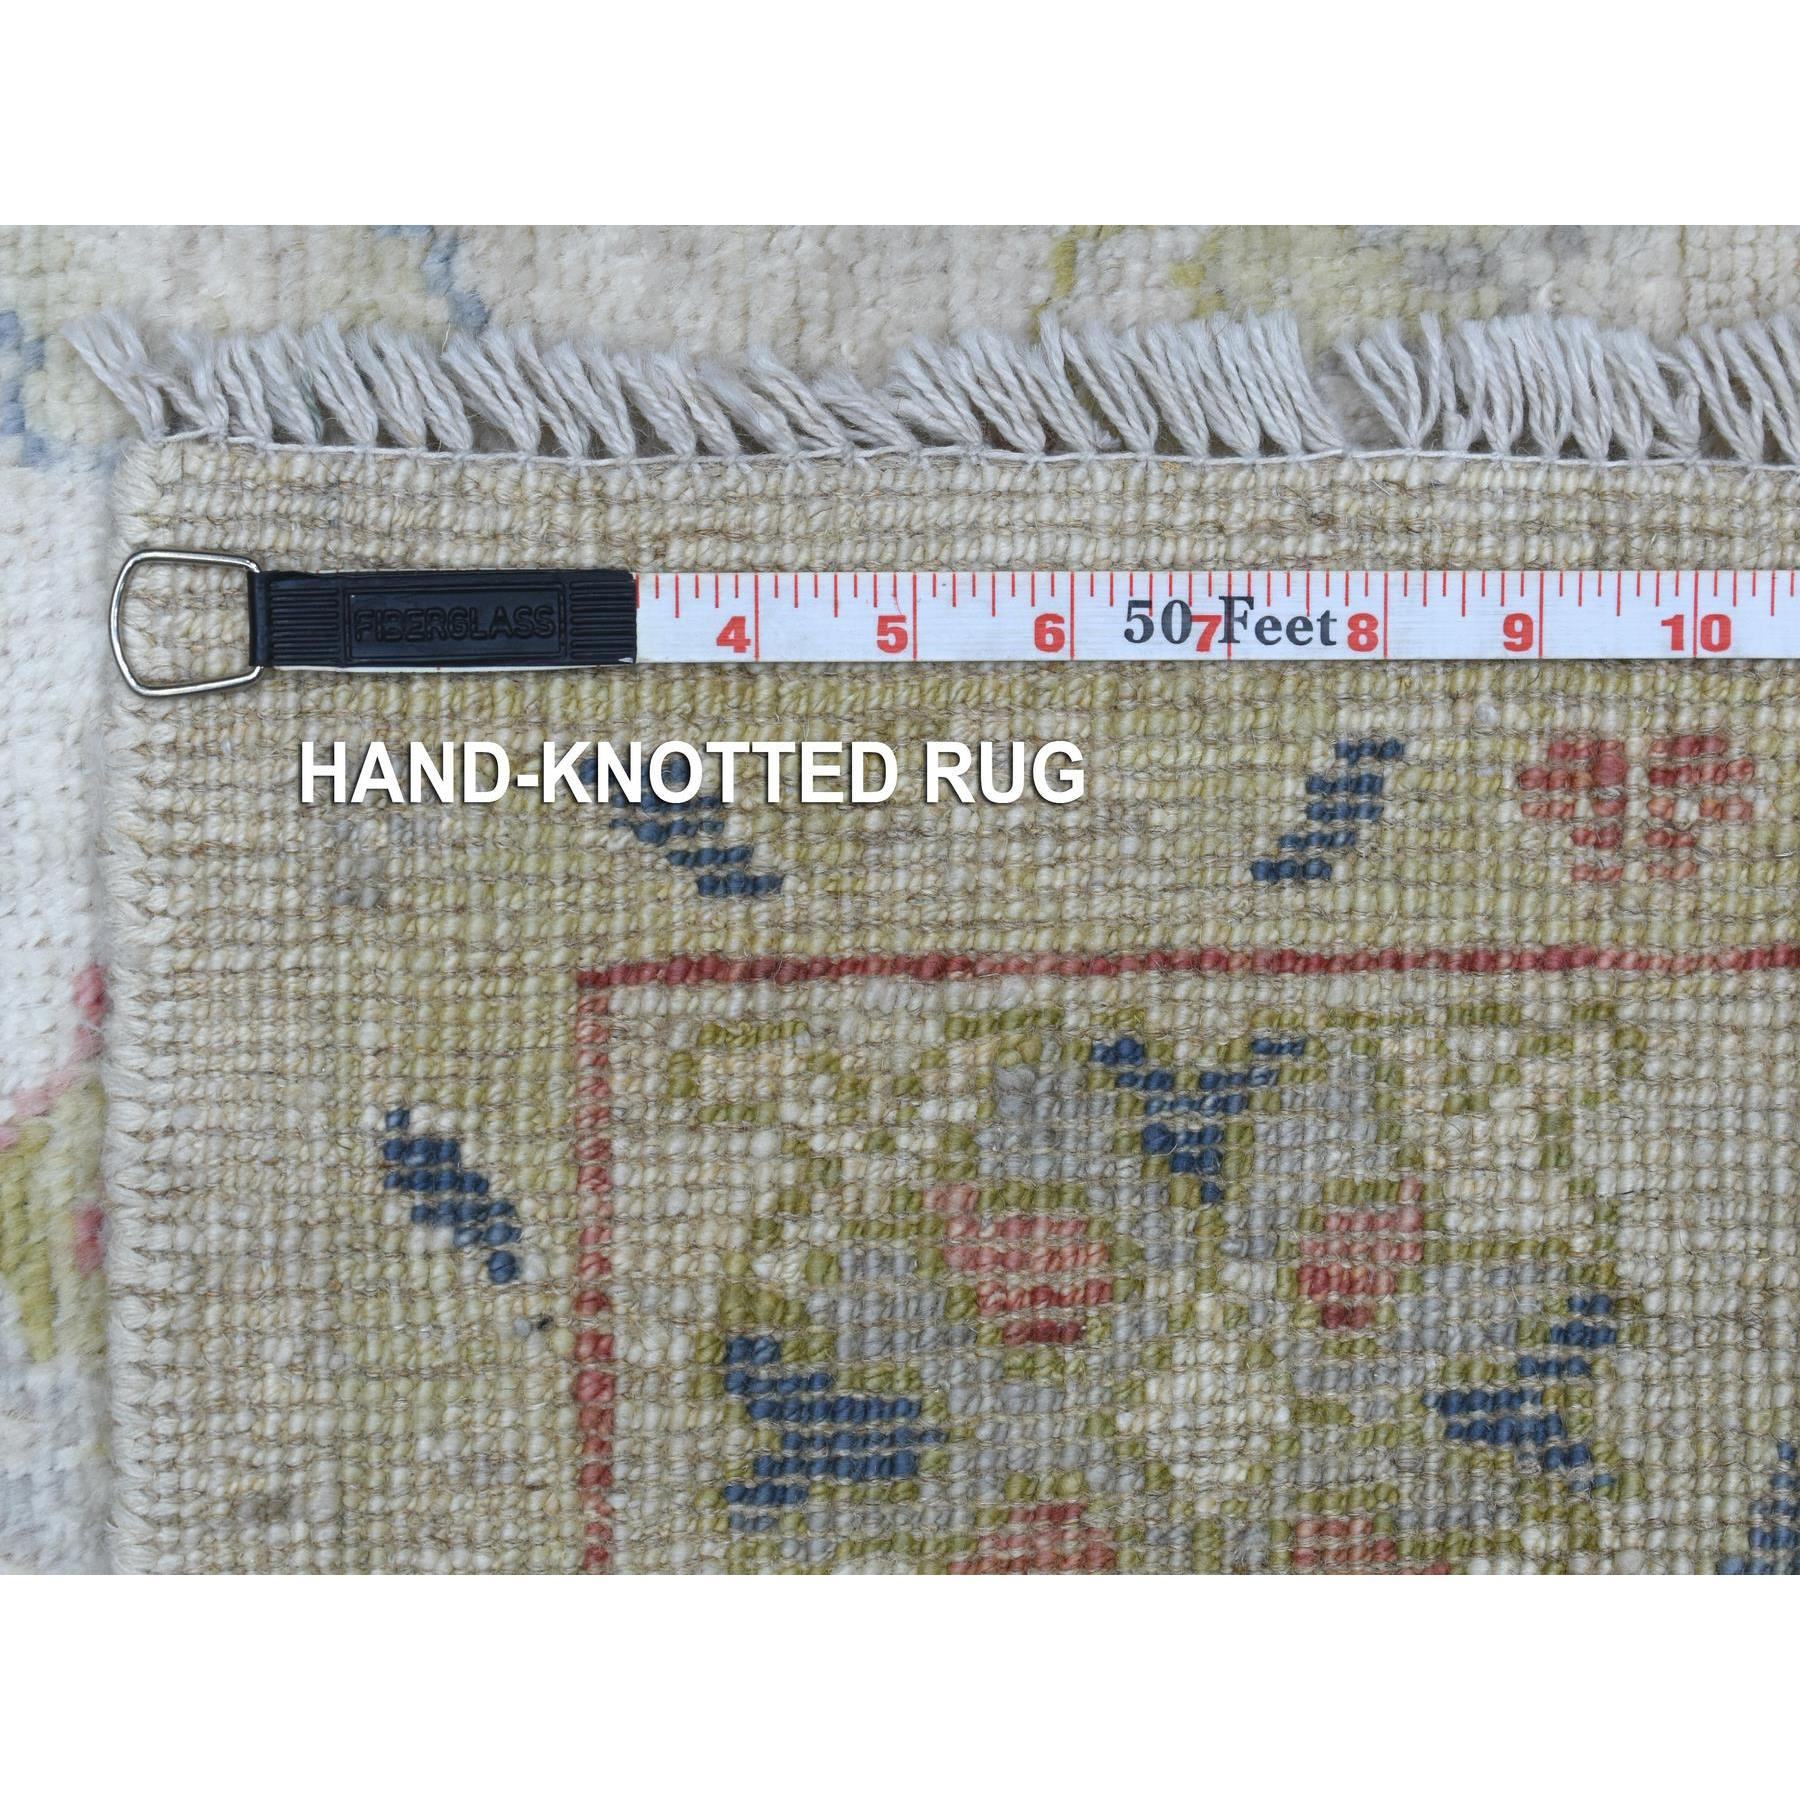 4'1"x6' Organic Wool Hand Woven Ivory Angora Ushak With A Beautiful, Color Pattern Oriental Rug 